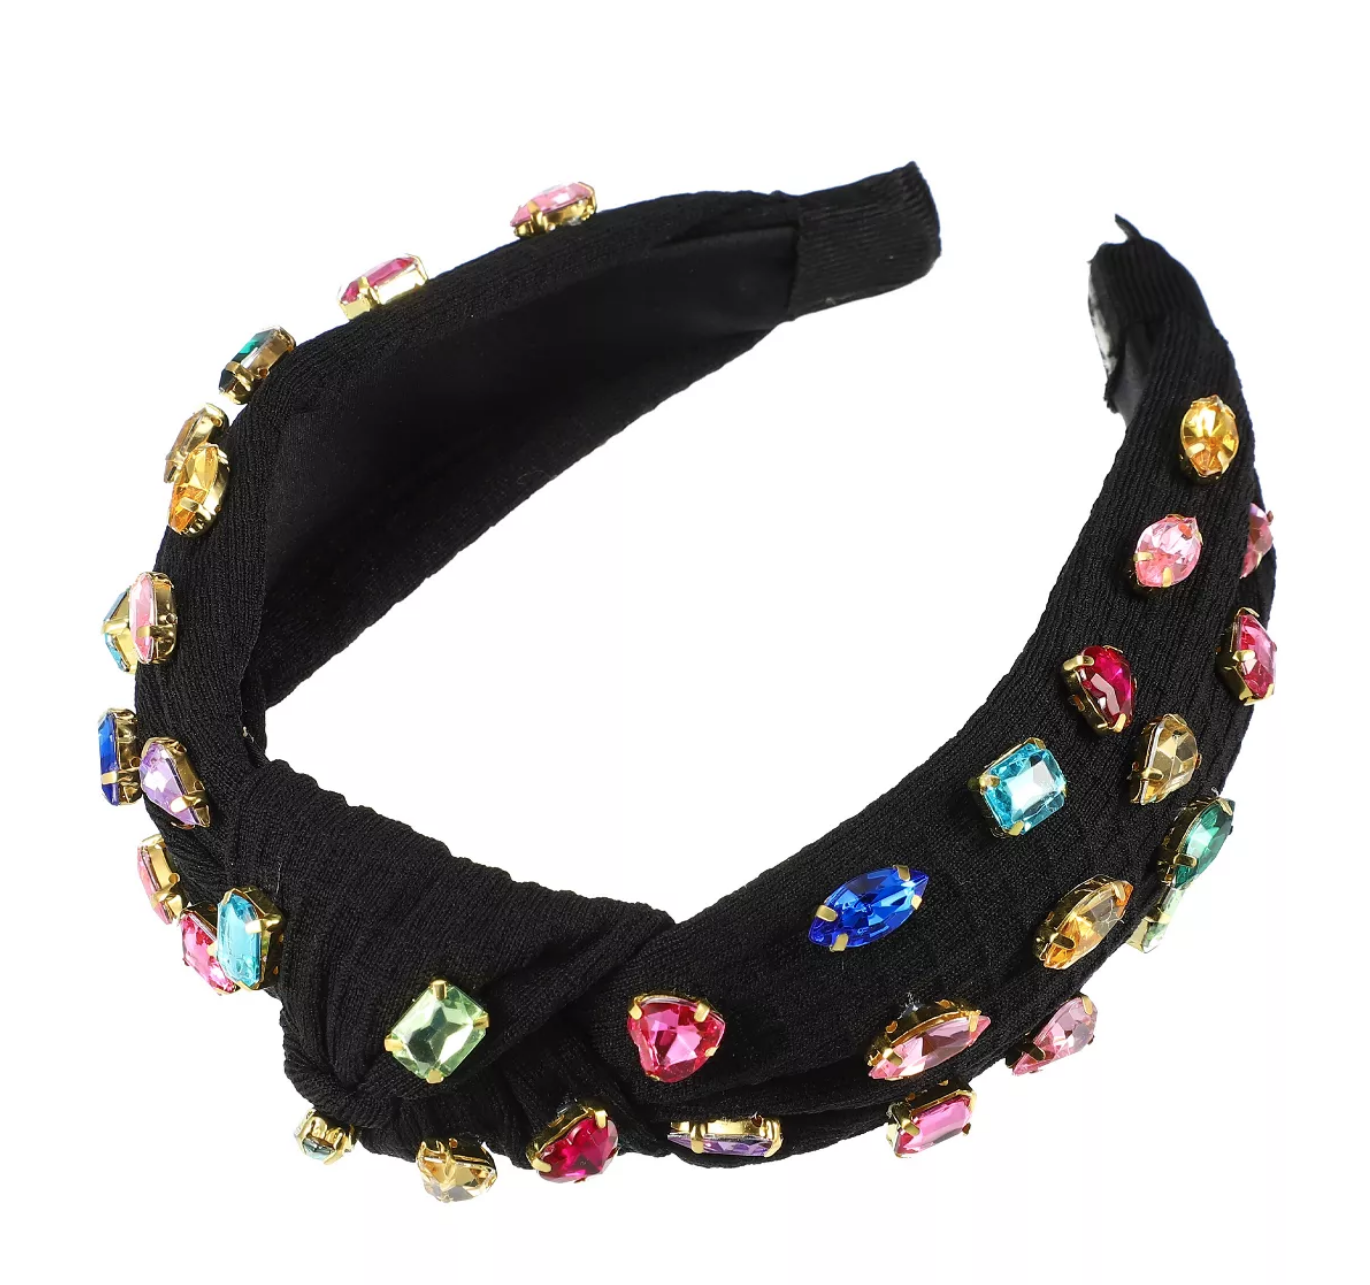 Venita Aspen's Black Rhinestone Embellished Headband